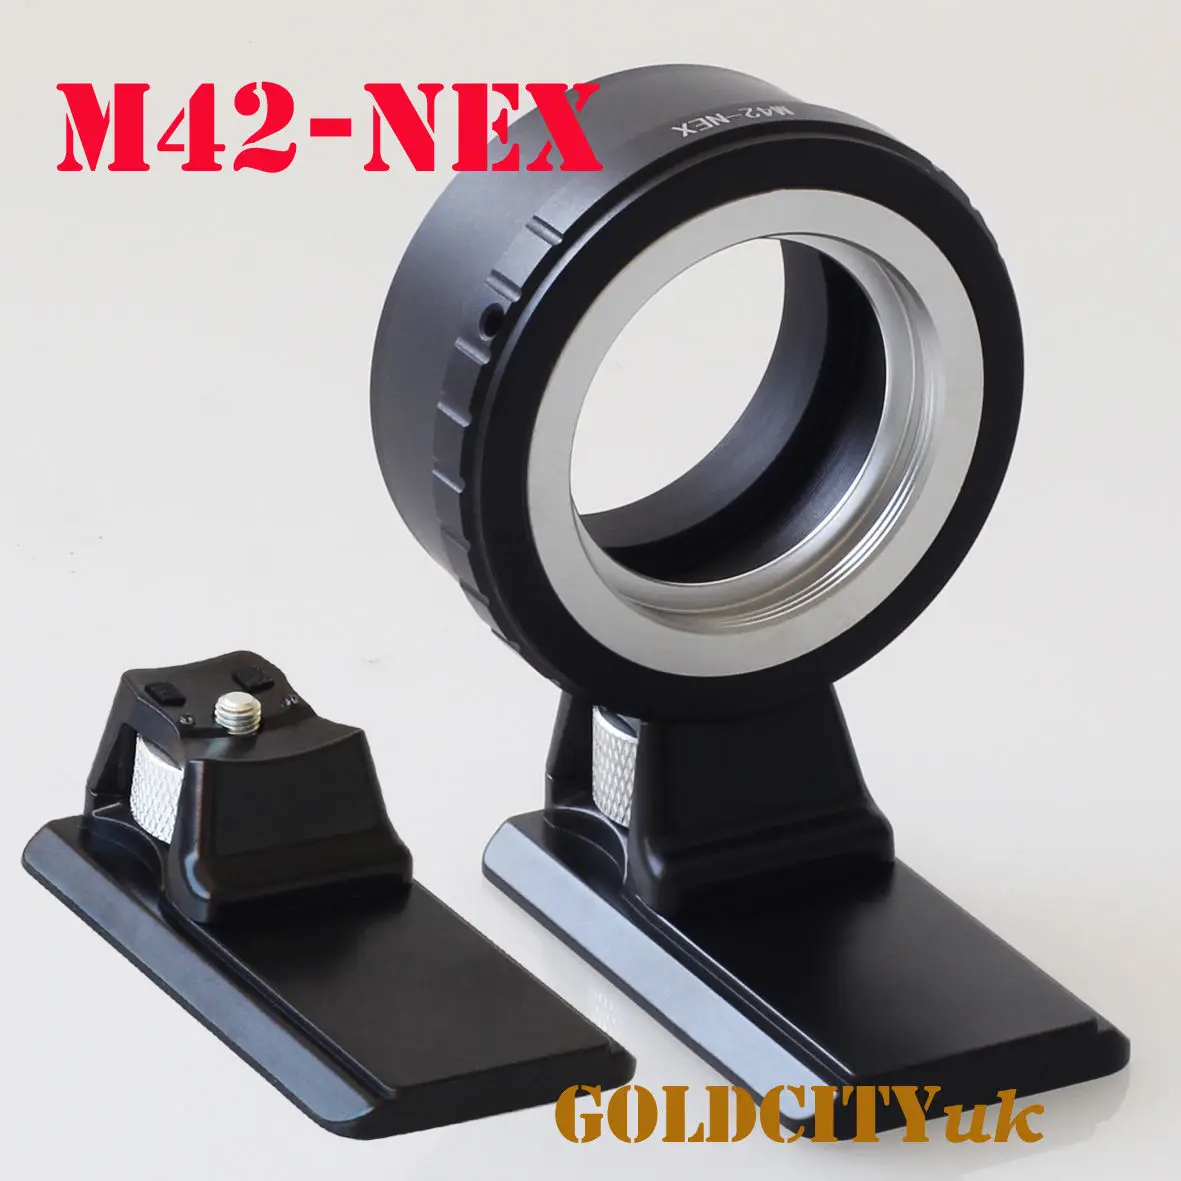 42 мм M42 Крепление объектива до E Mount nex переходное кольцо с штатив Стенд для NEX NEX-3/C3/5/5N/6/7 A7 A7r A5100 A7s A5000 A6000 камеры